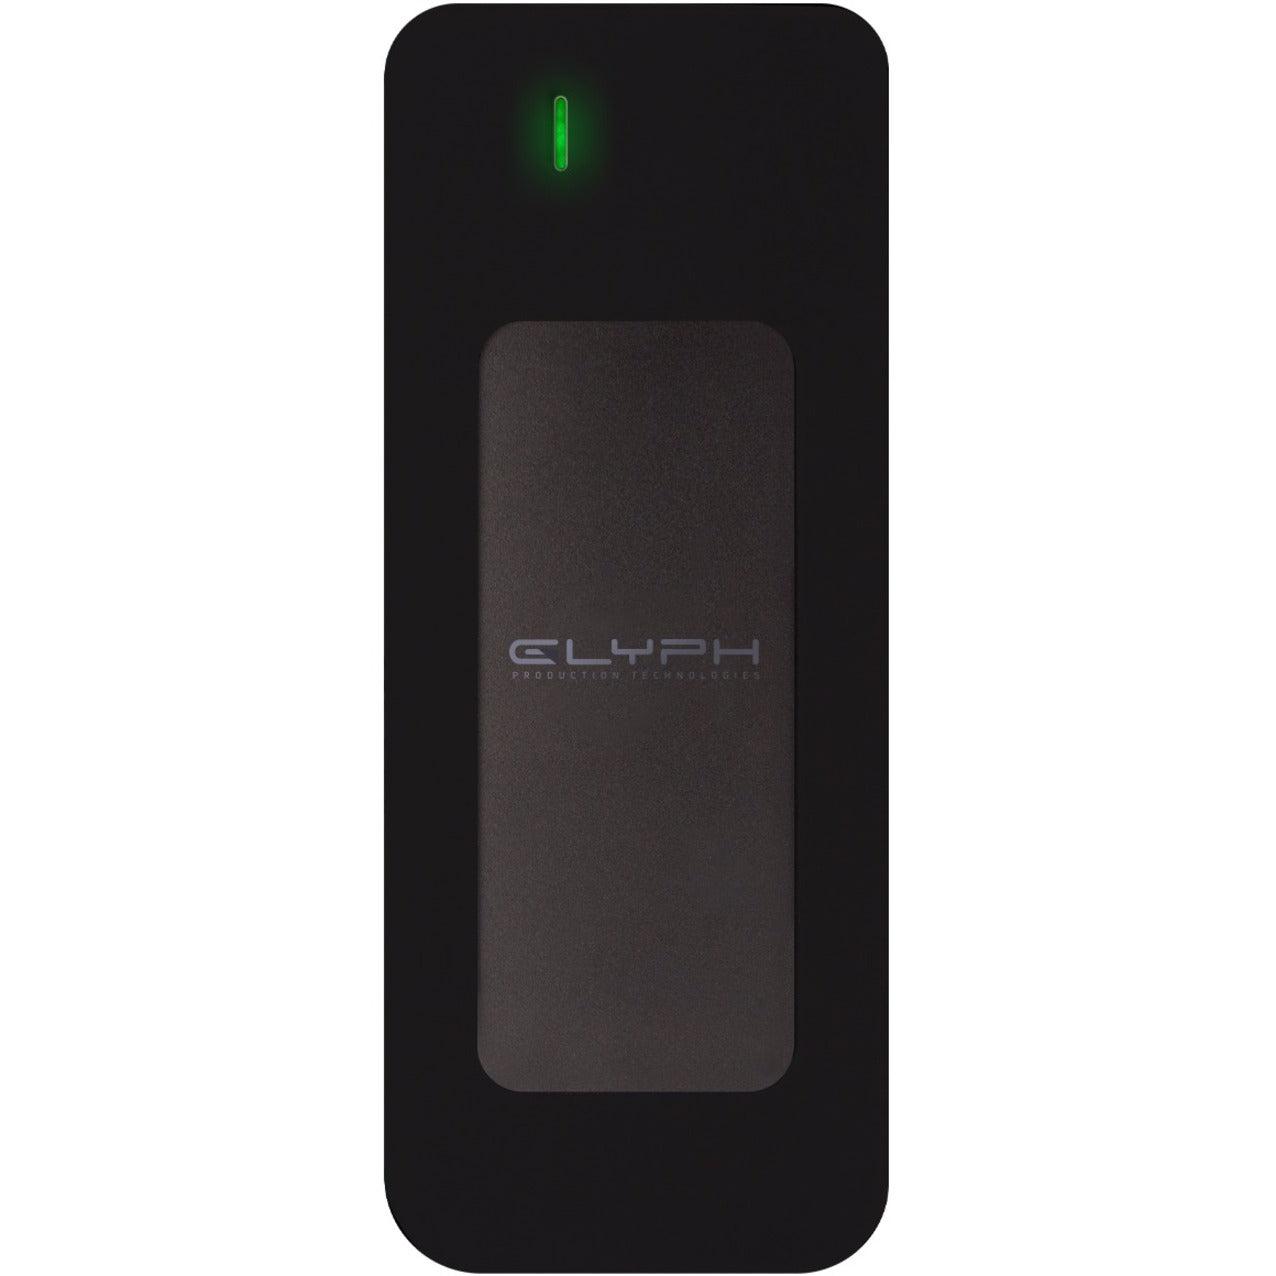 Glyph A2000BLK Atom External SSD, 2 TB Portable Solid State Drive - Black